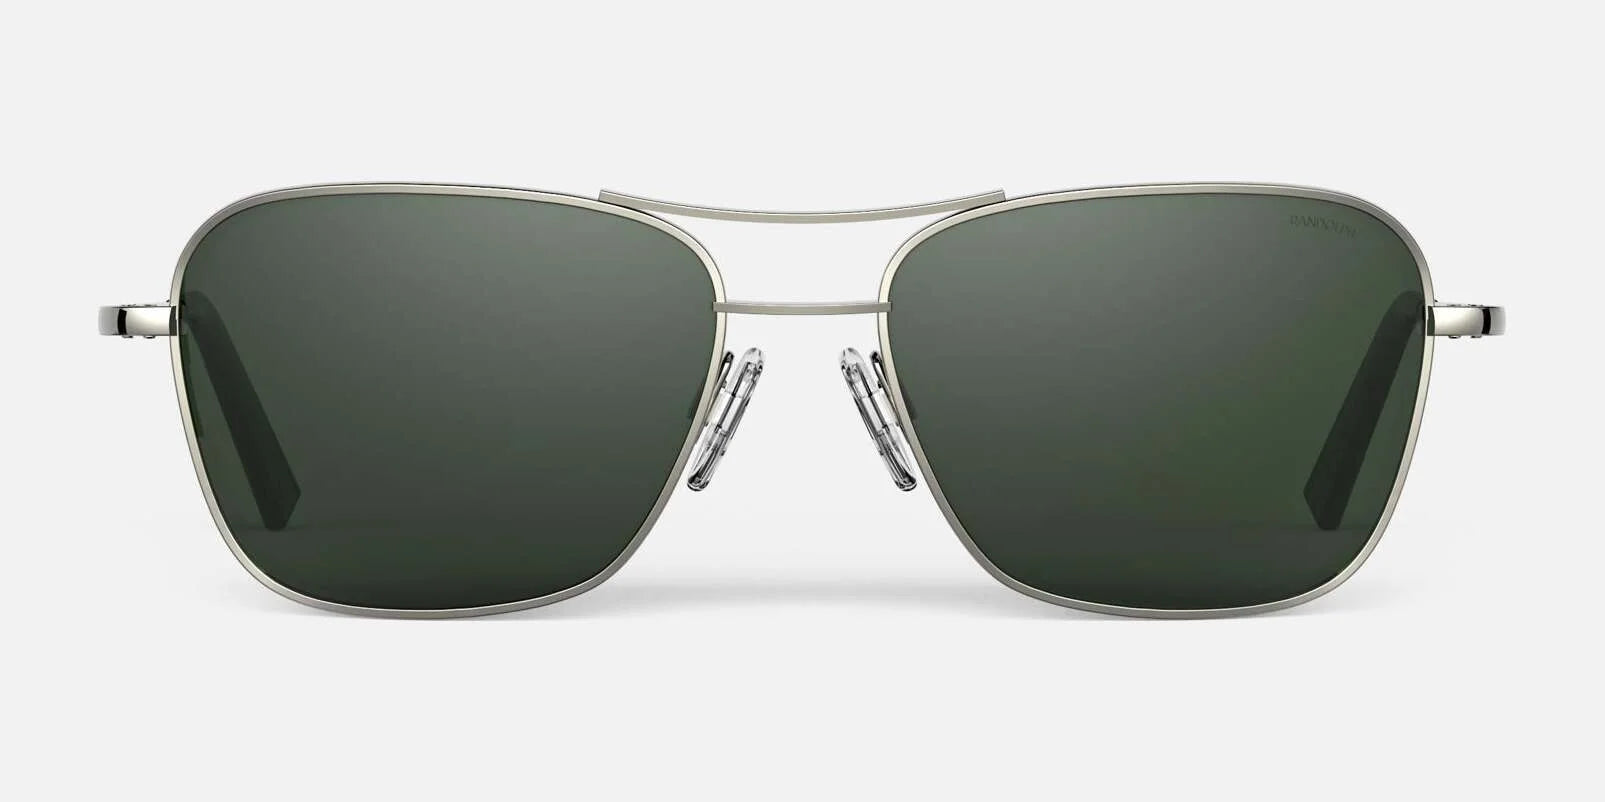 Randolph CORSAIR Sunglasses / Gunmetal / AGX Polarized Glass